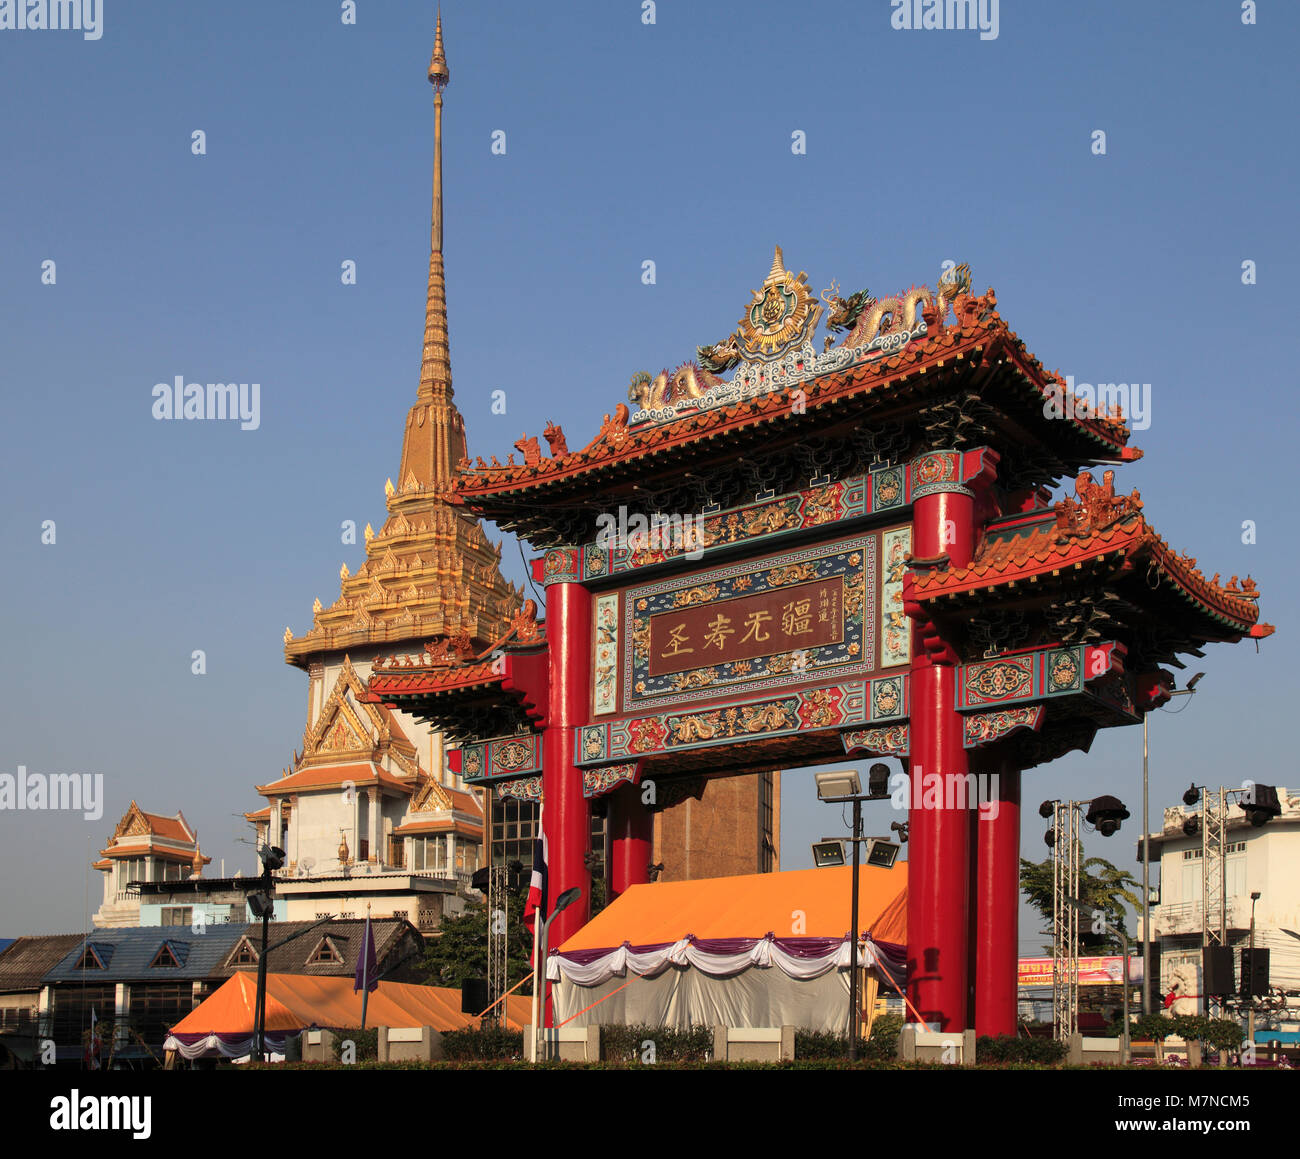 Thailand, Bangkok, Chinatown Gate, Wat Traimit, Golden Buddha Temple, Stock Photo